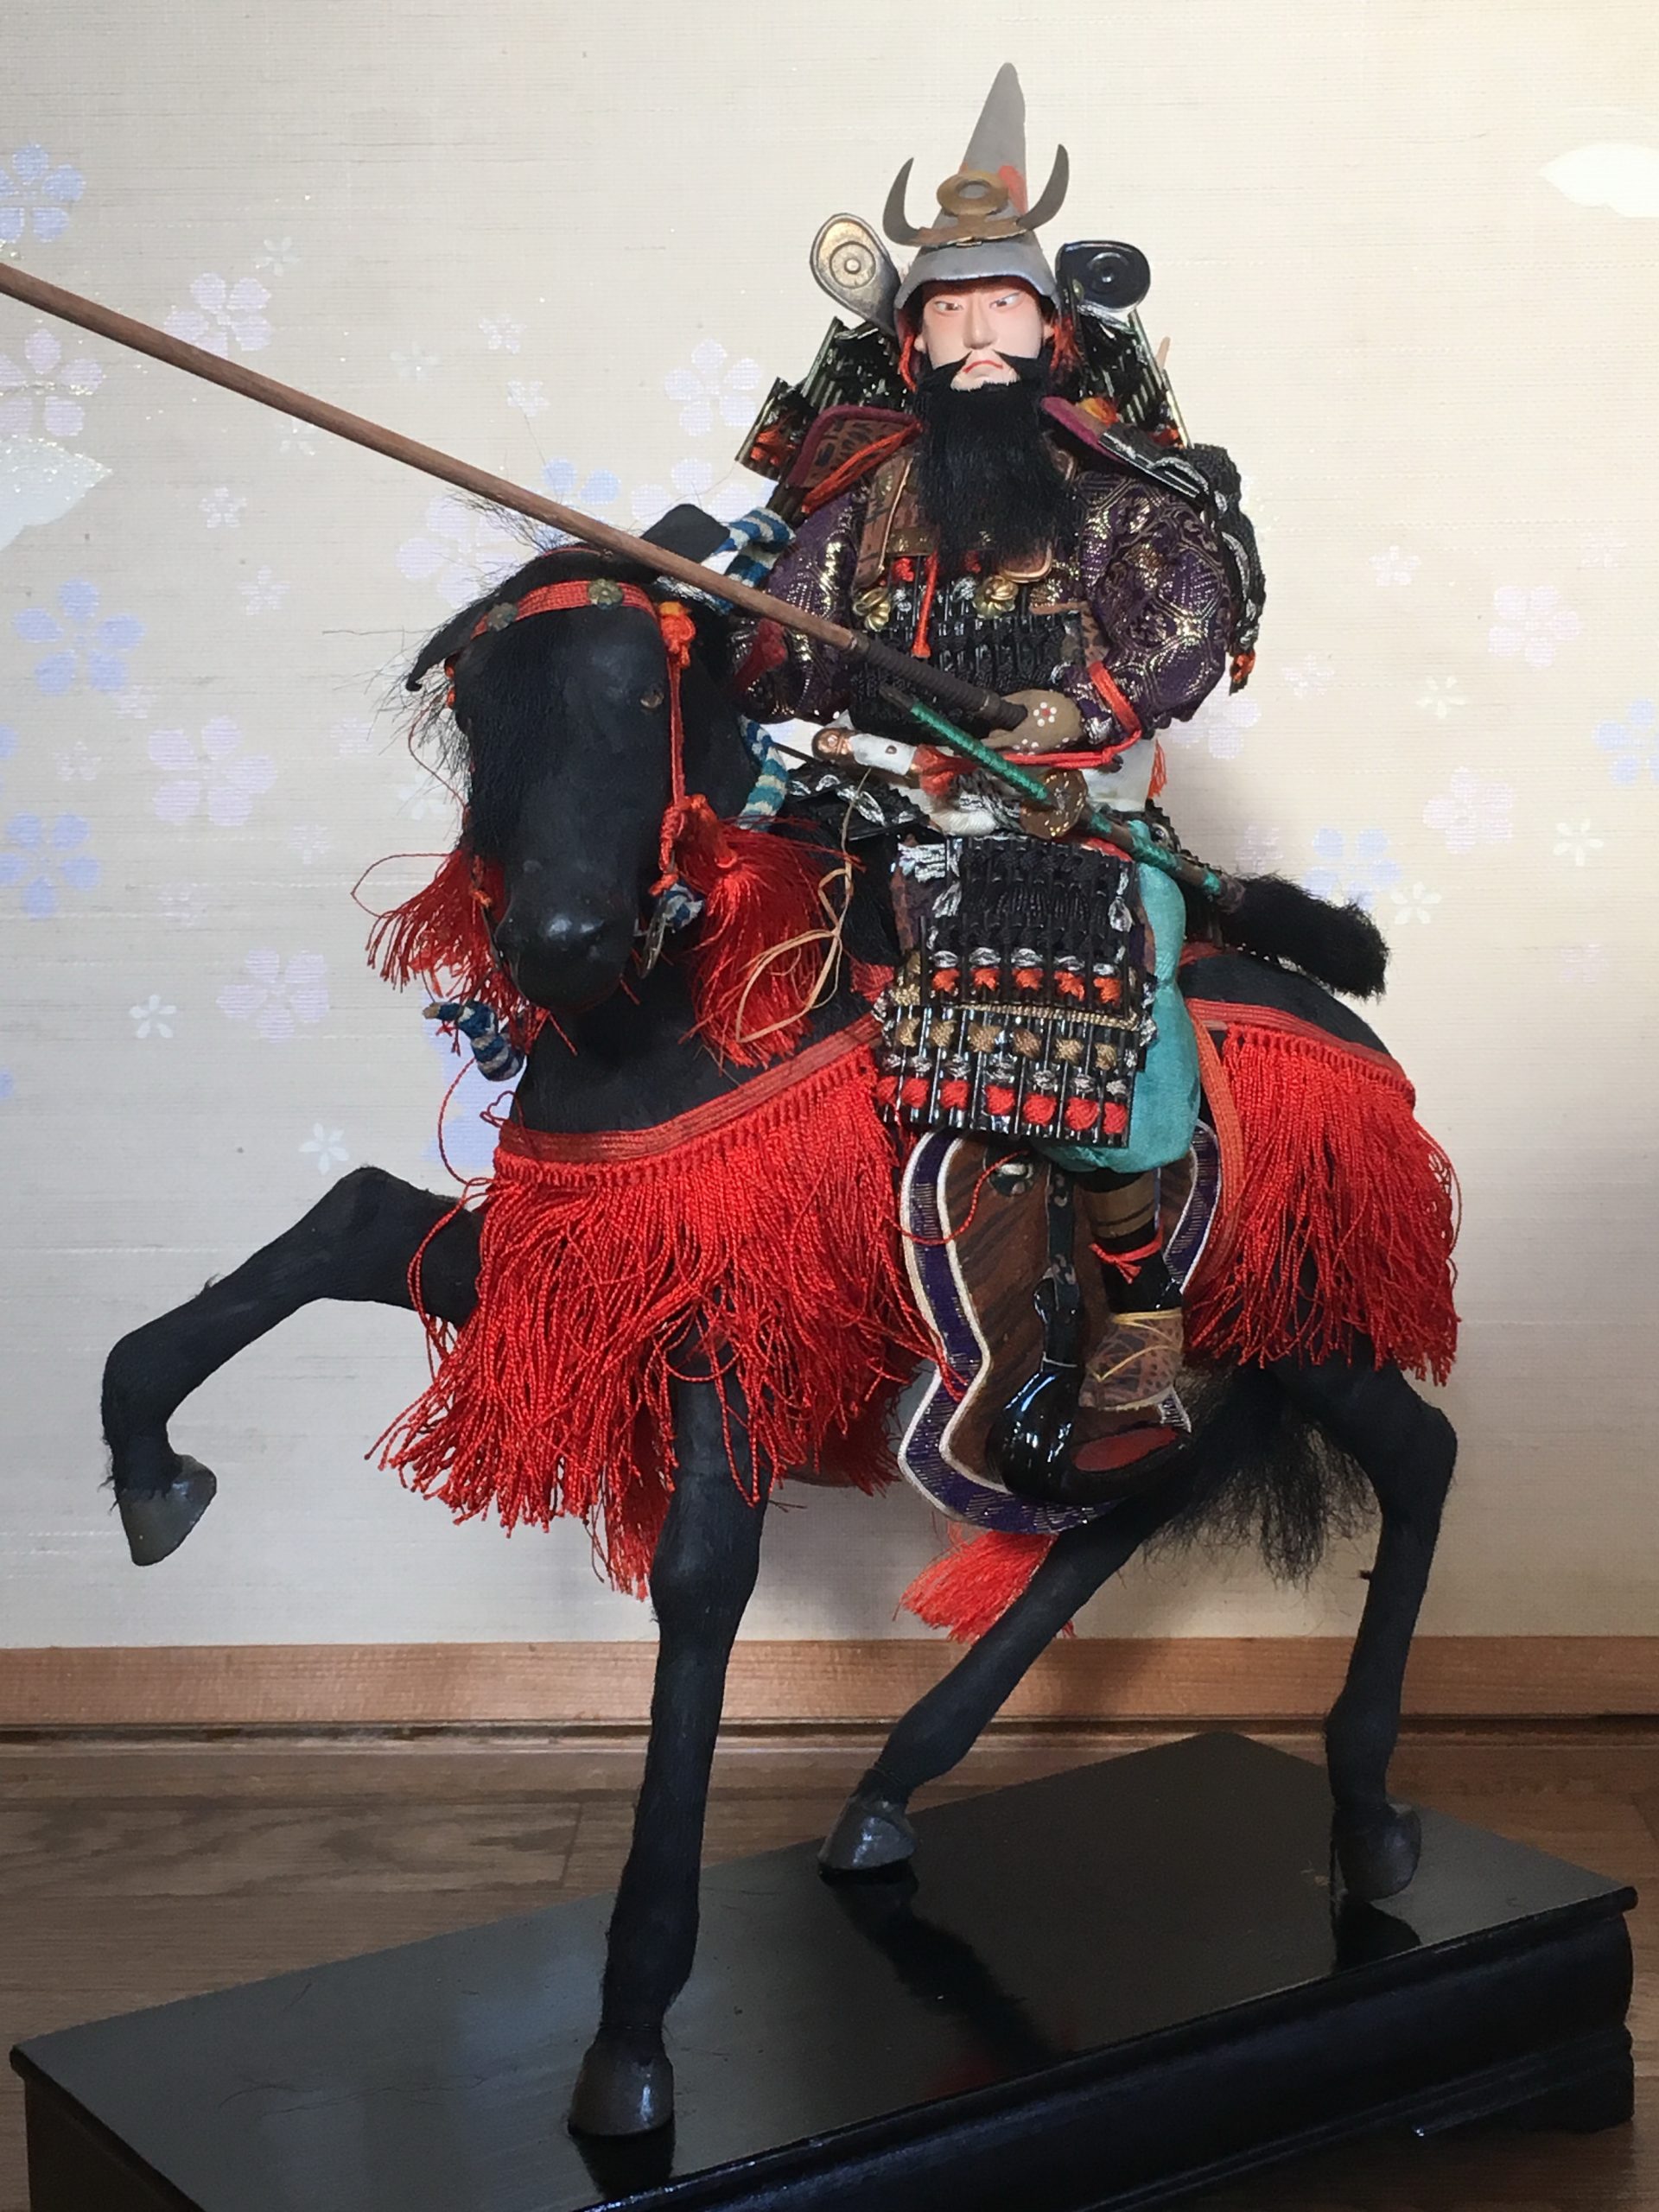 Antique Samurai Armor / YOROI